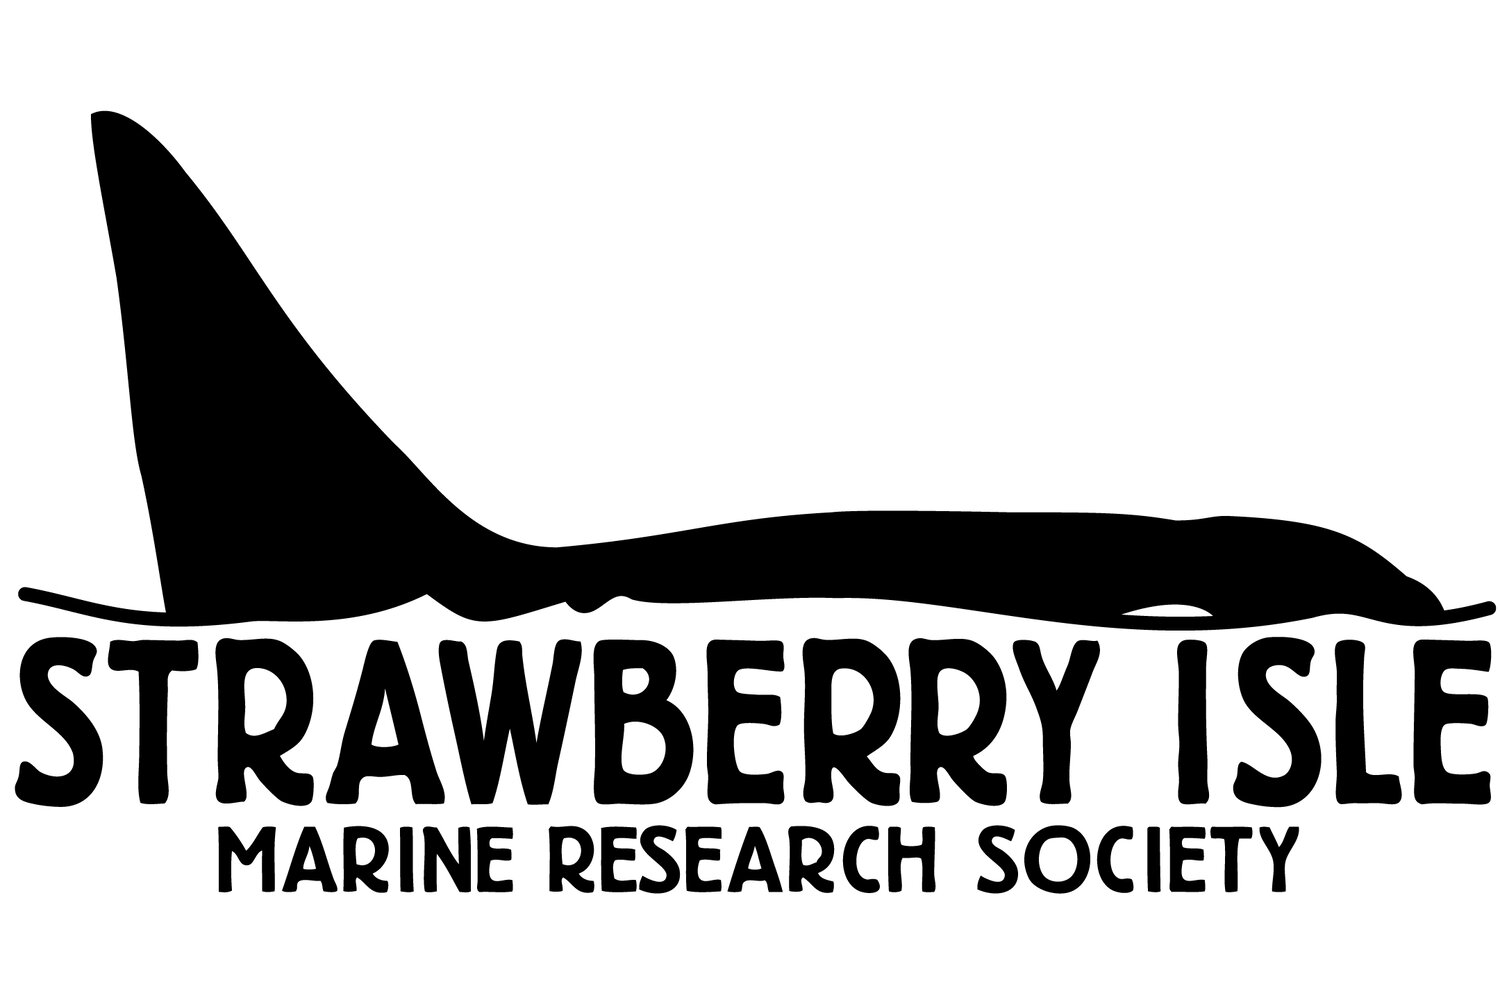 STRAWBERRY ISLE MARINE RESEARCH SOCIETY 